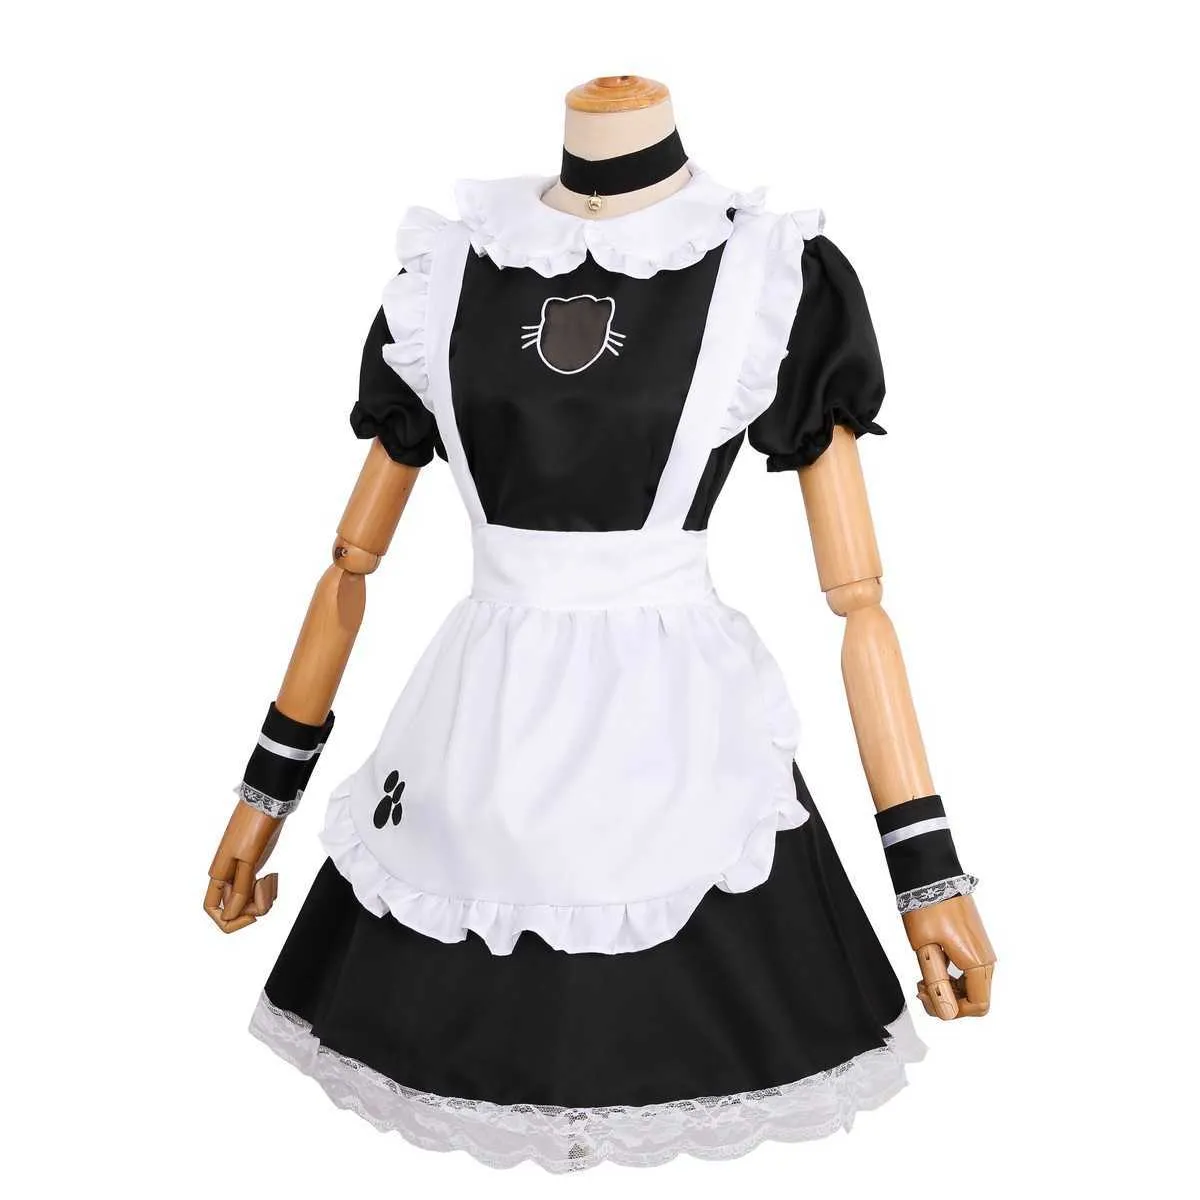 S-4XL Sexy Français Maid Costume Doux Gothique Lolita Robe Anime Cosplay Sissy Uniforme Plus La Taille Halloween Costumes Pour Wome Y0913